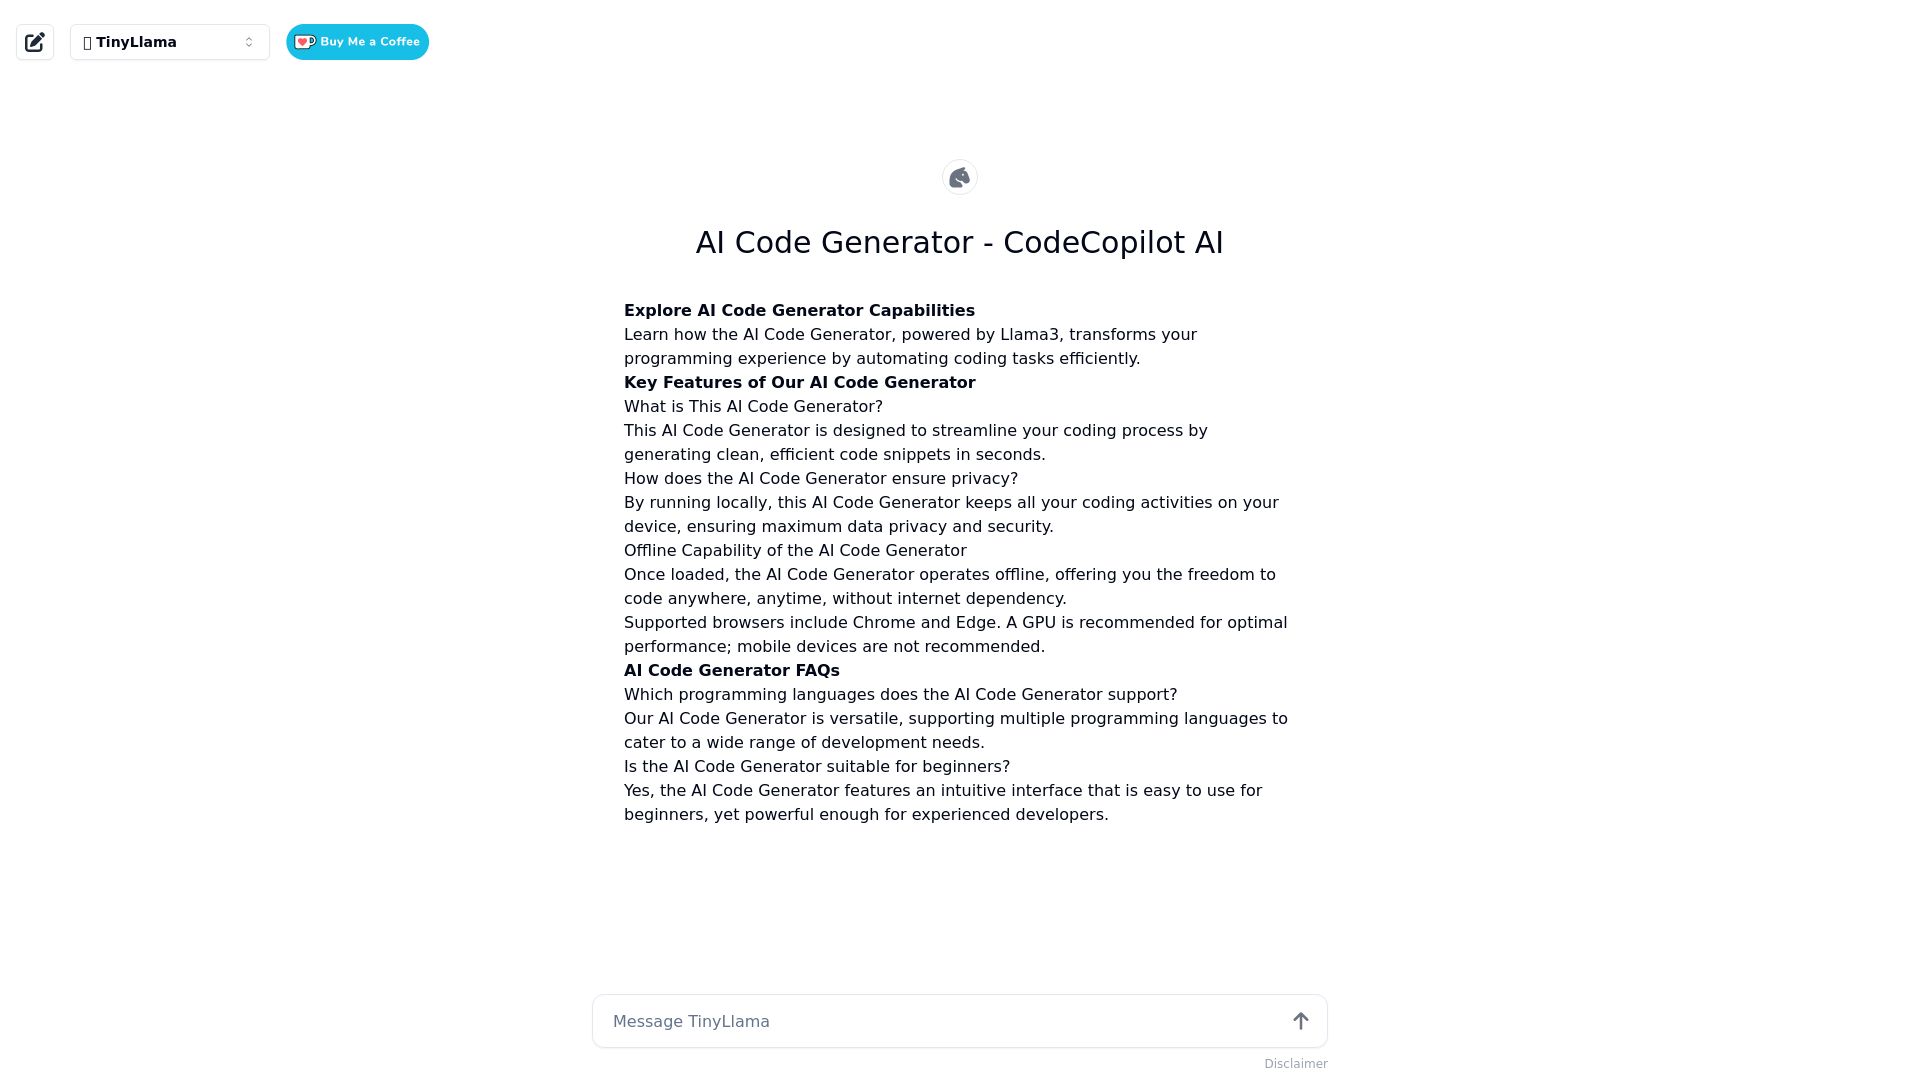 CodeCopilot AI - AI Code Generator